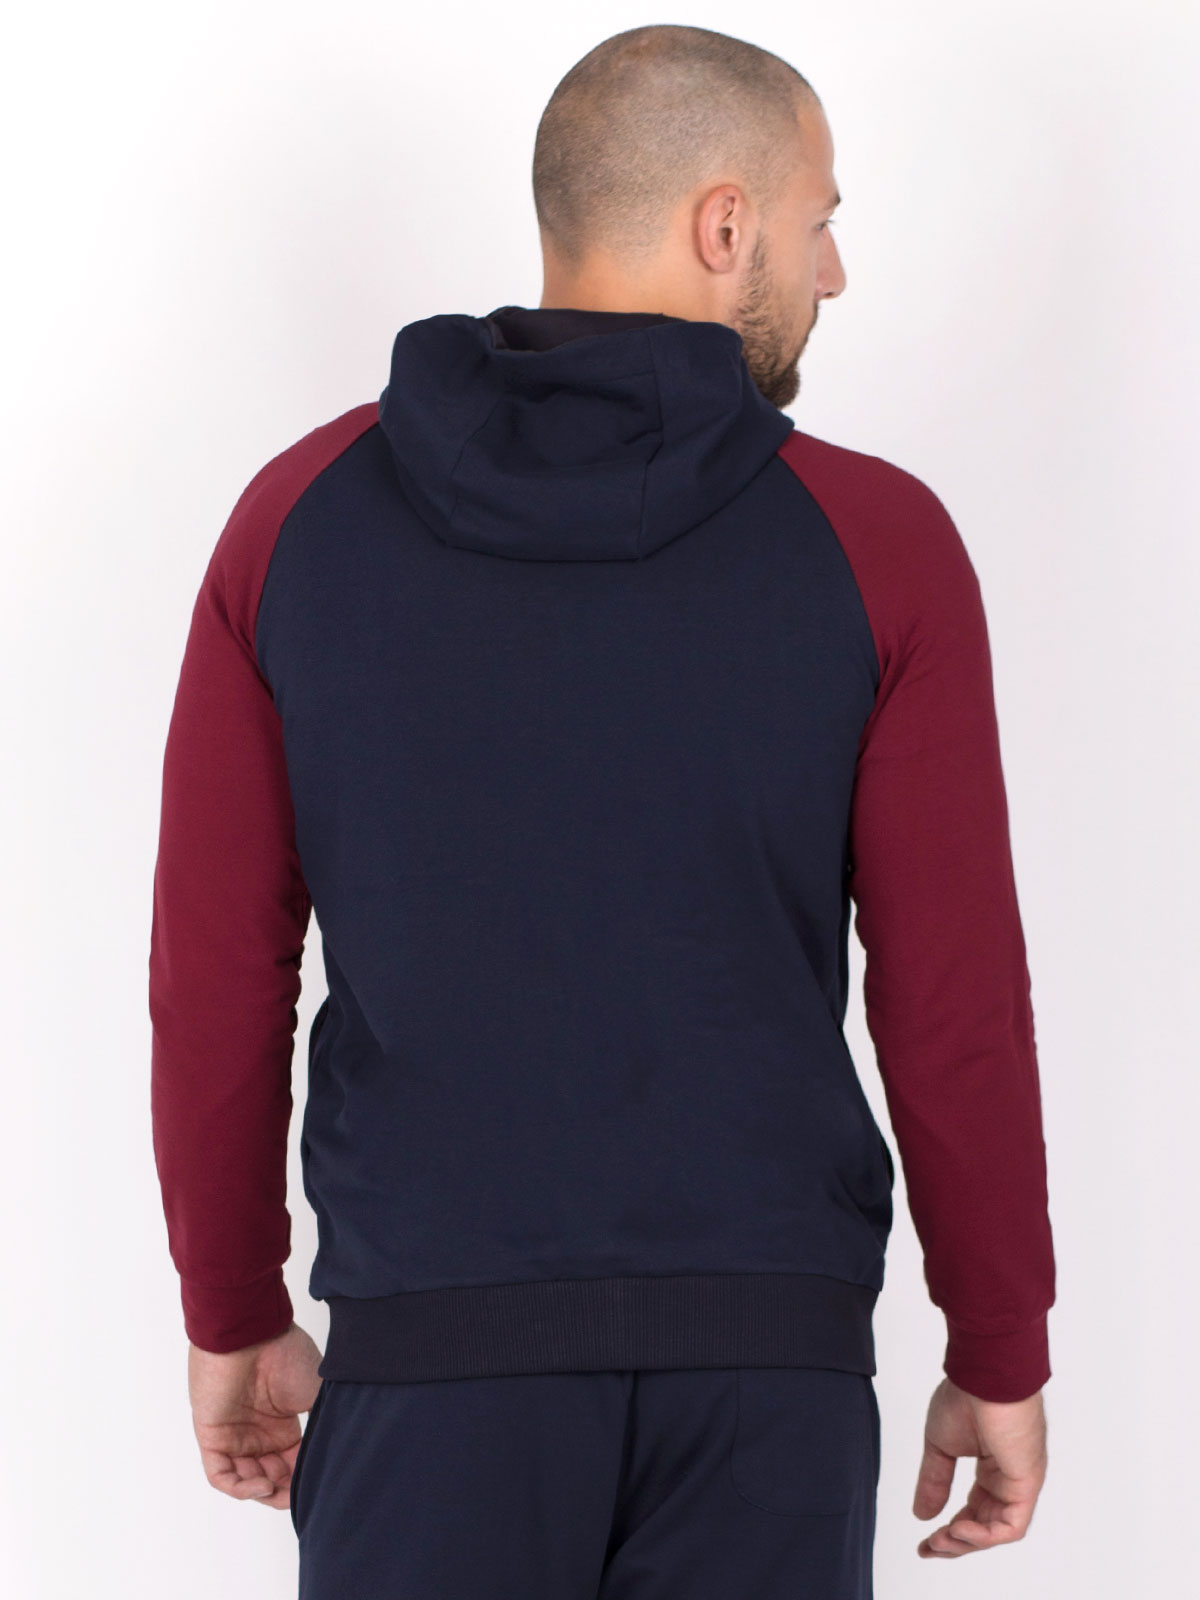 Sweatshirt in burgundy and navy blue - 28107 € 50.06 img5